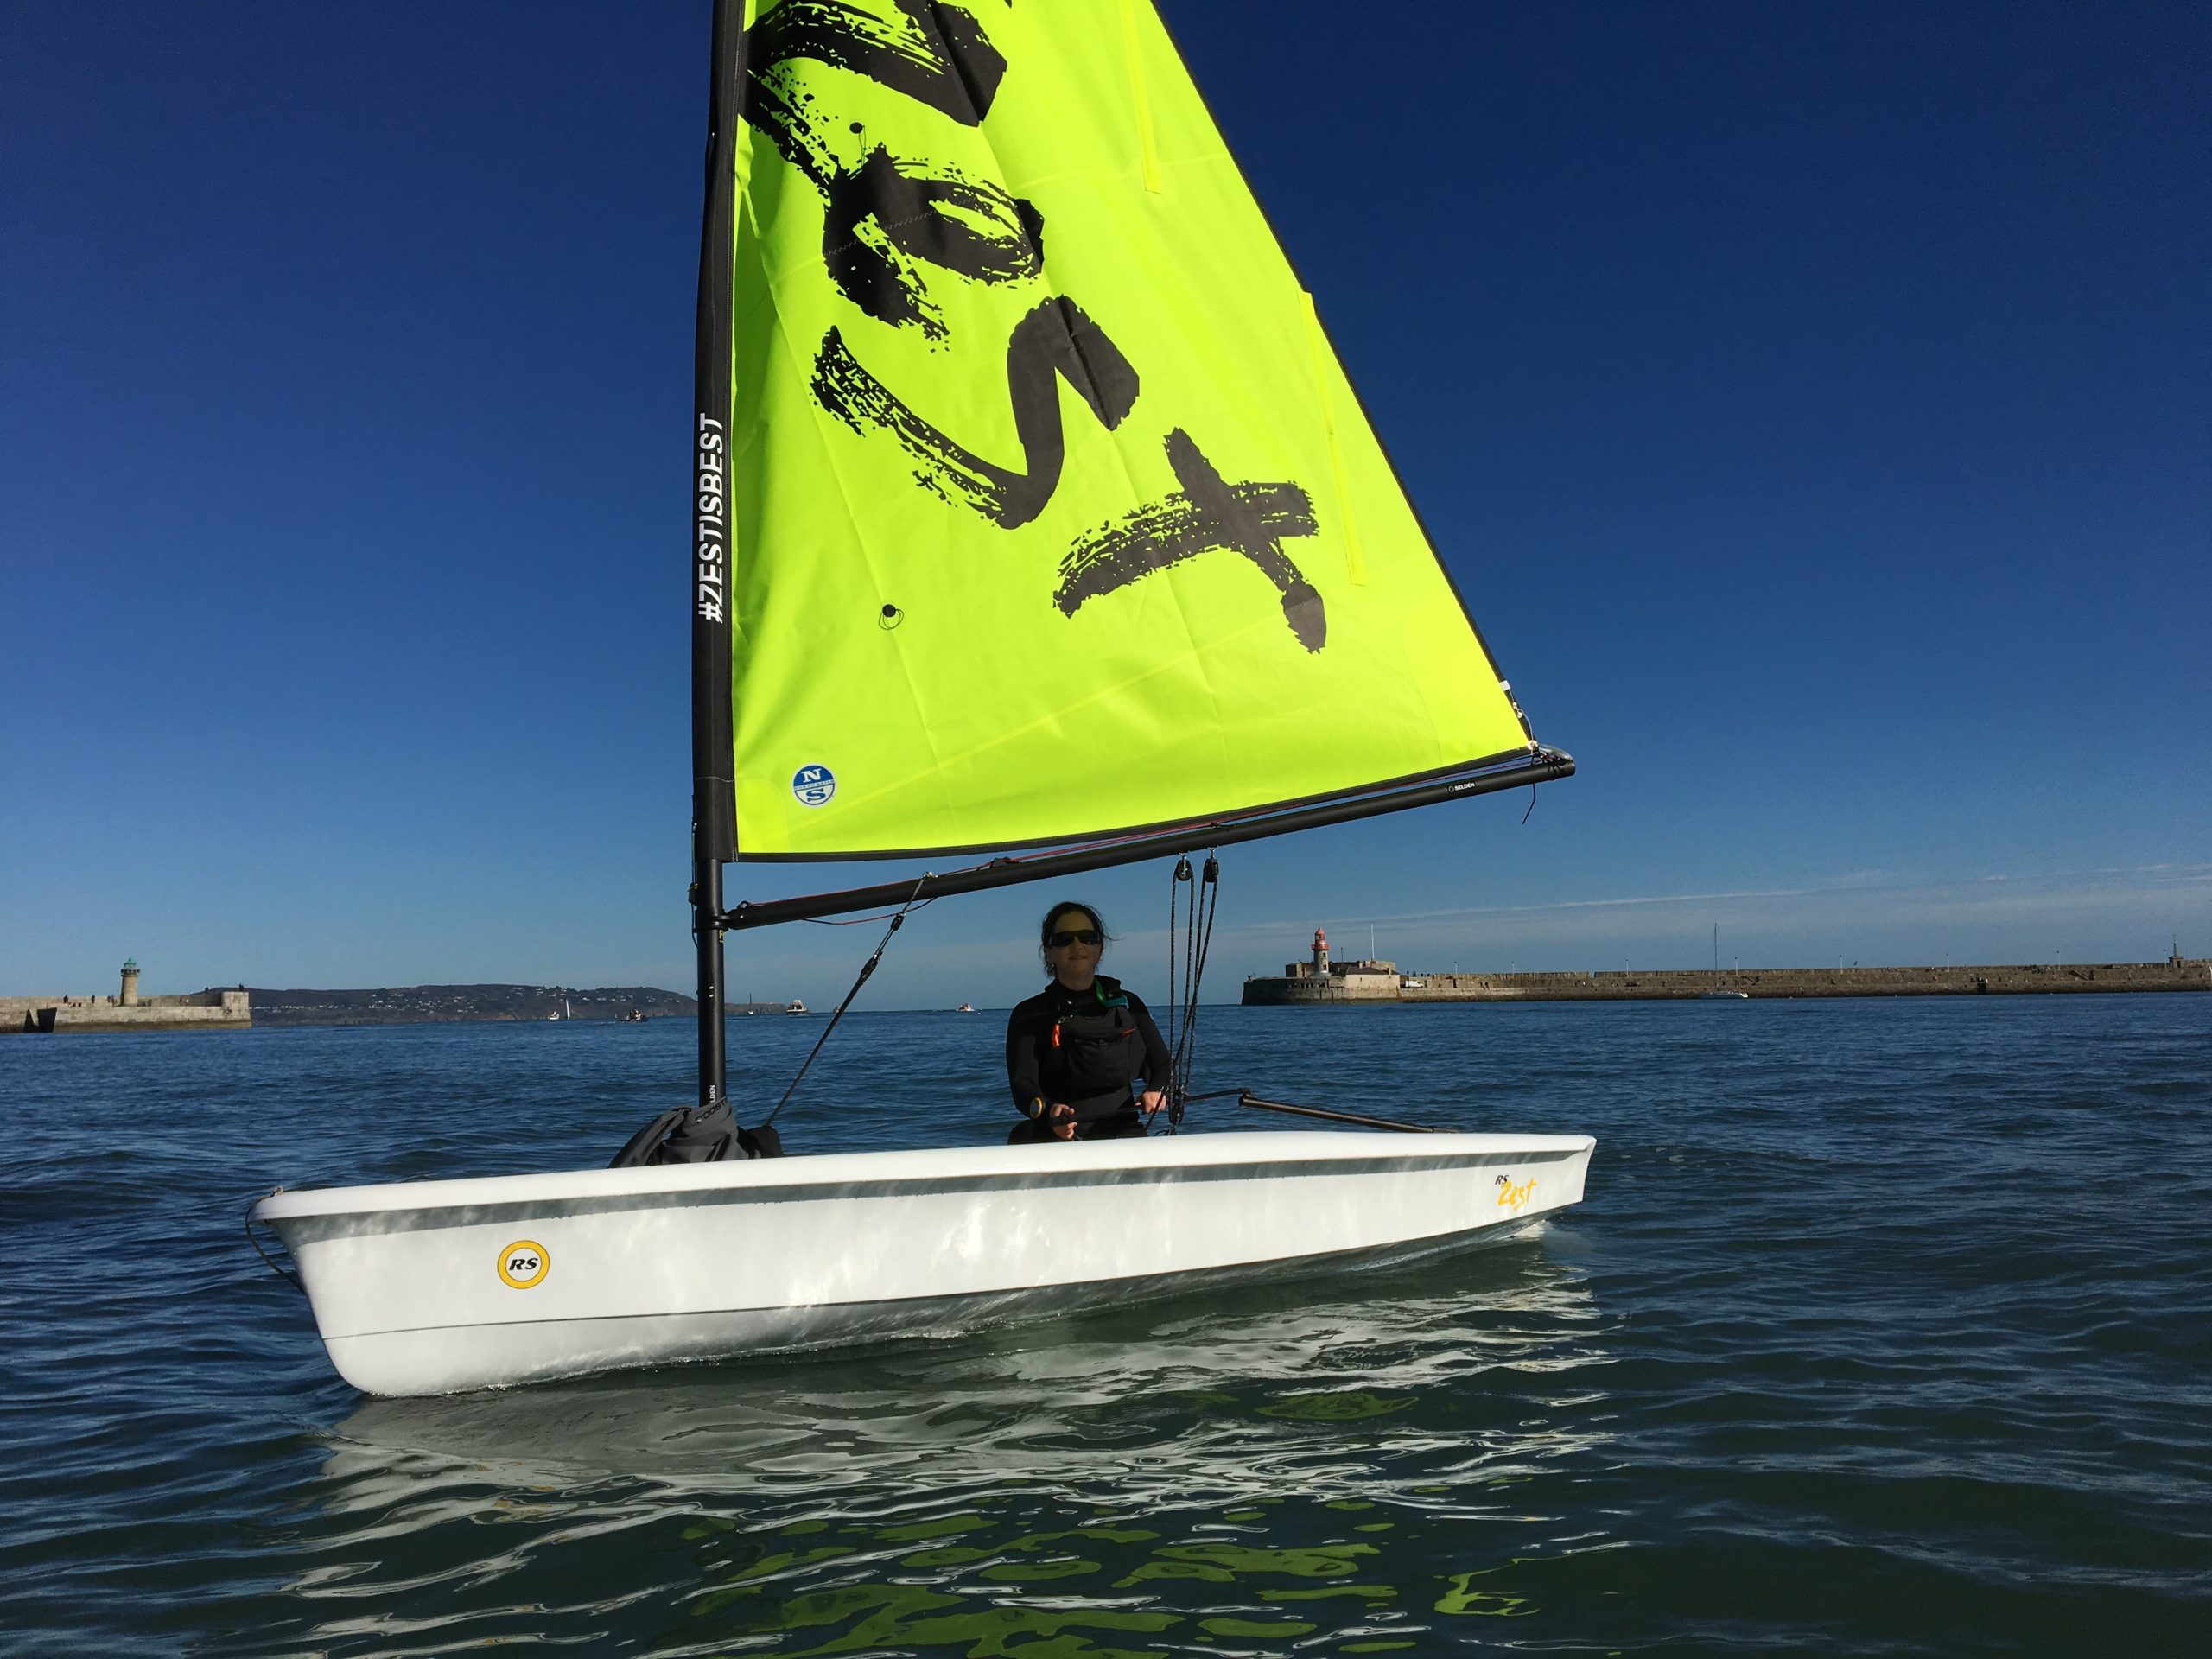 beginner sailing course